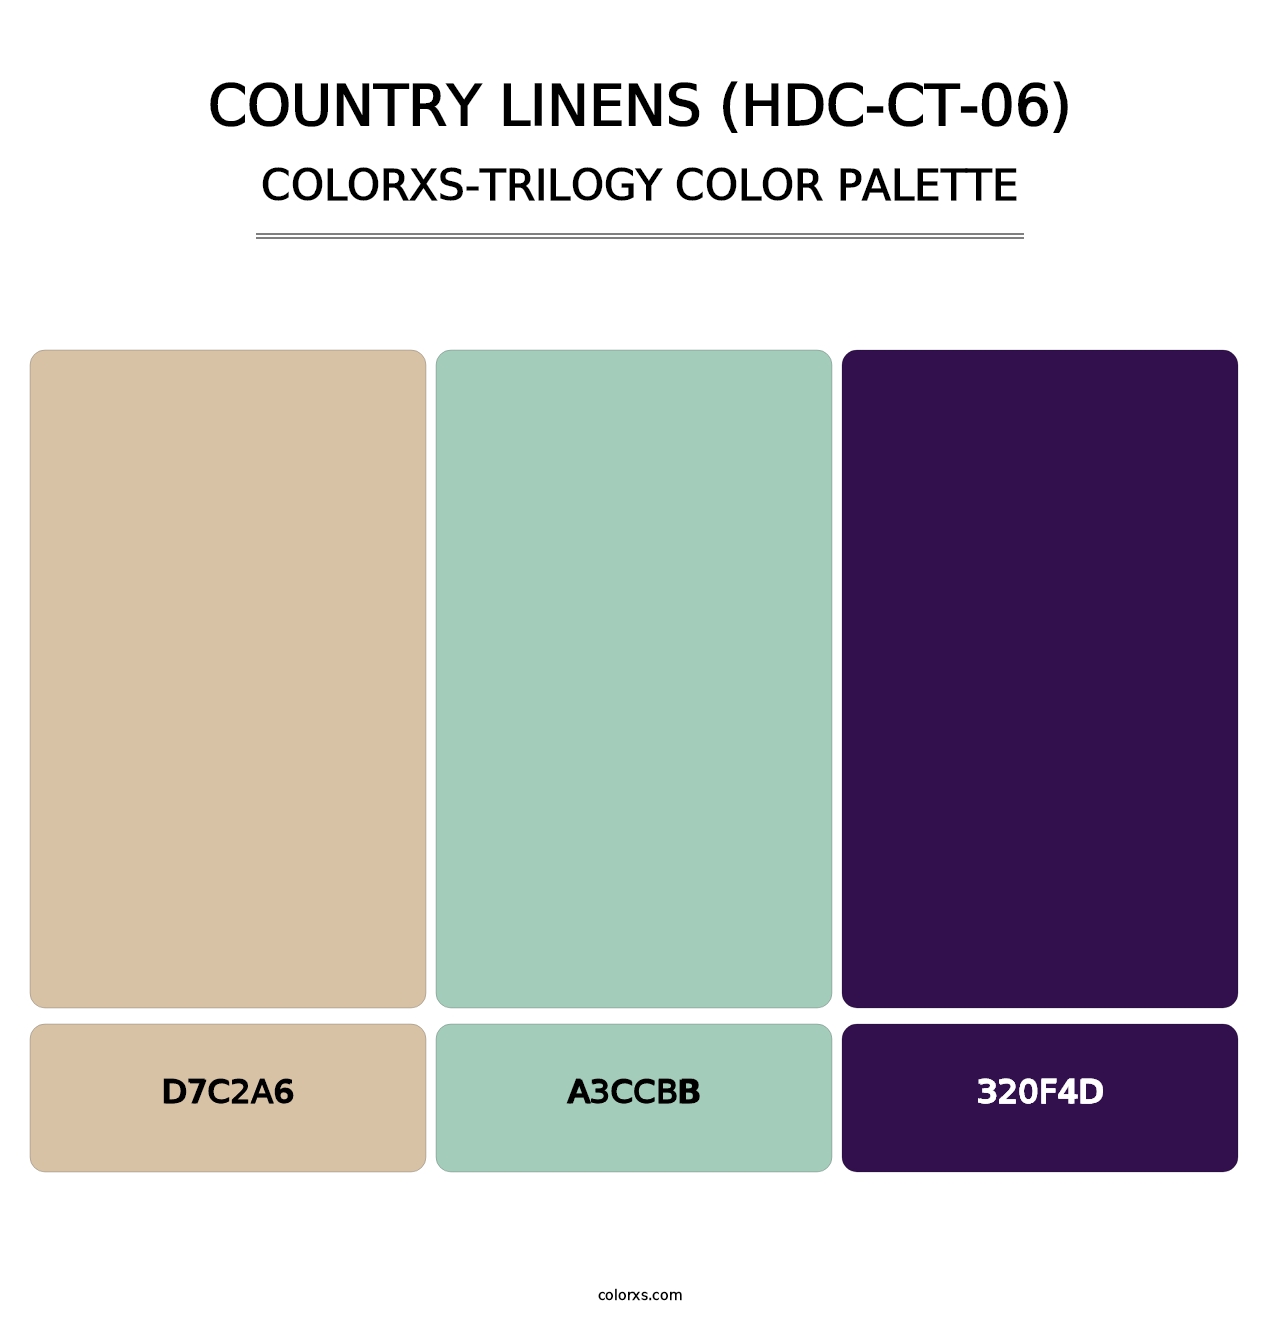 Country Linens (HDC-CT-06) - Colorxs Trilogy Palette